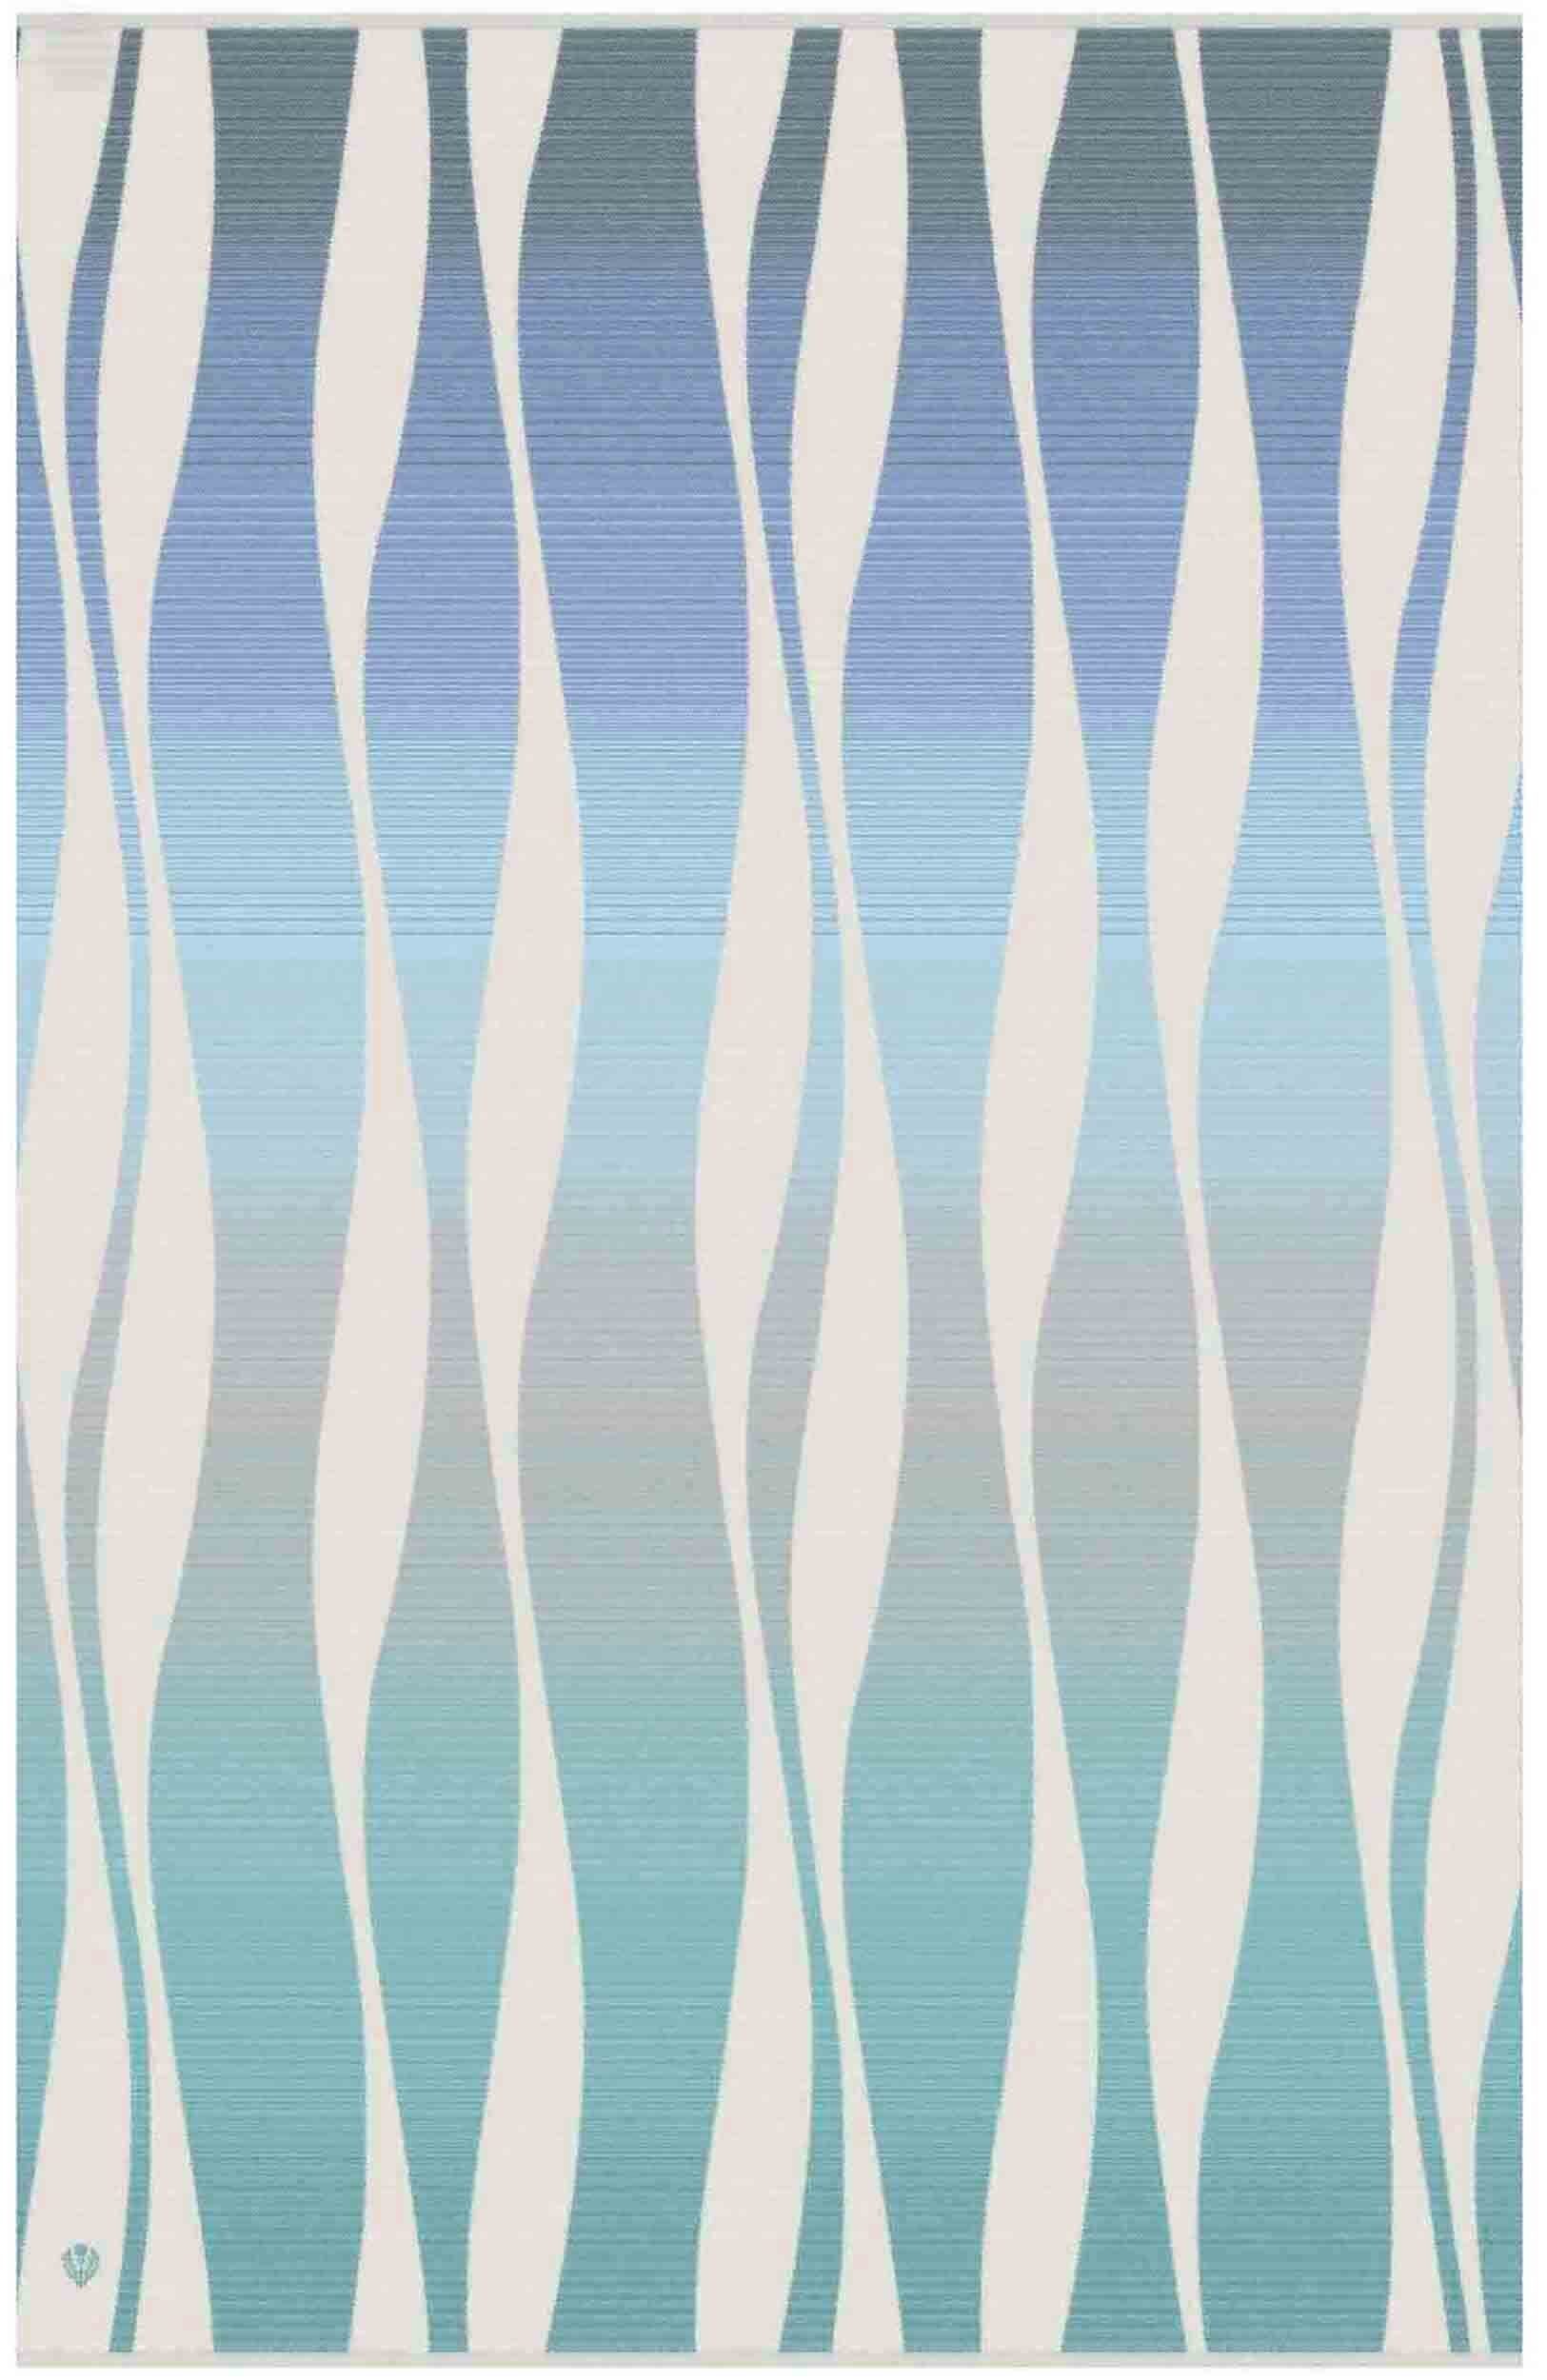 Plaid Baumwolle Decke, Fraas royal blue